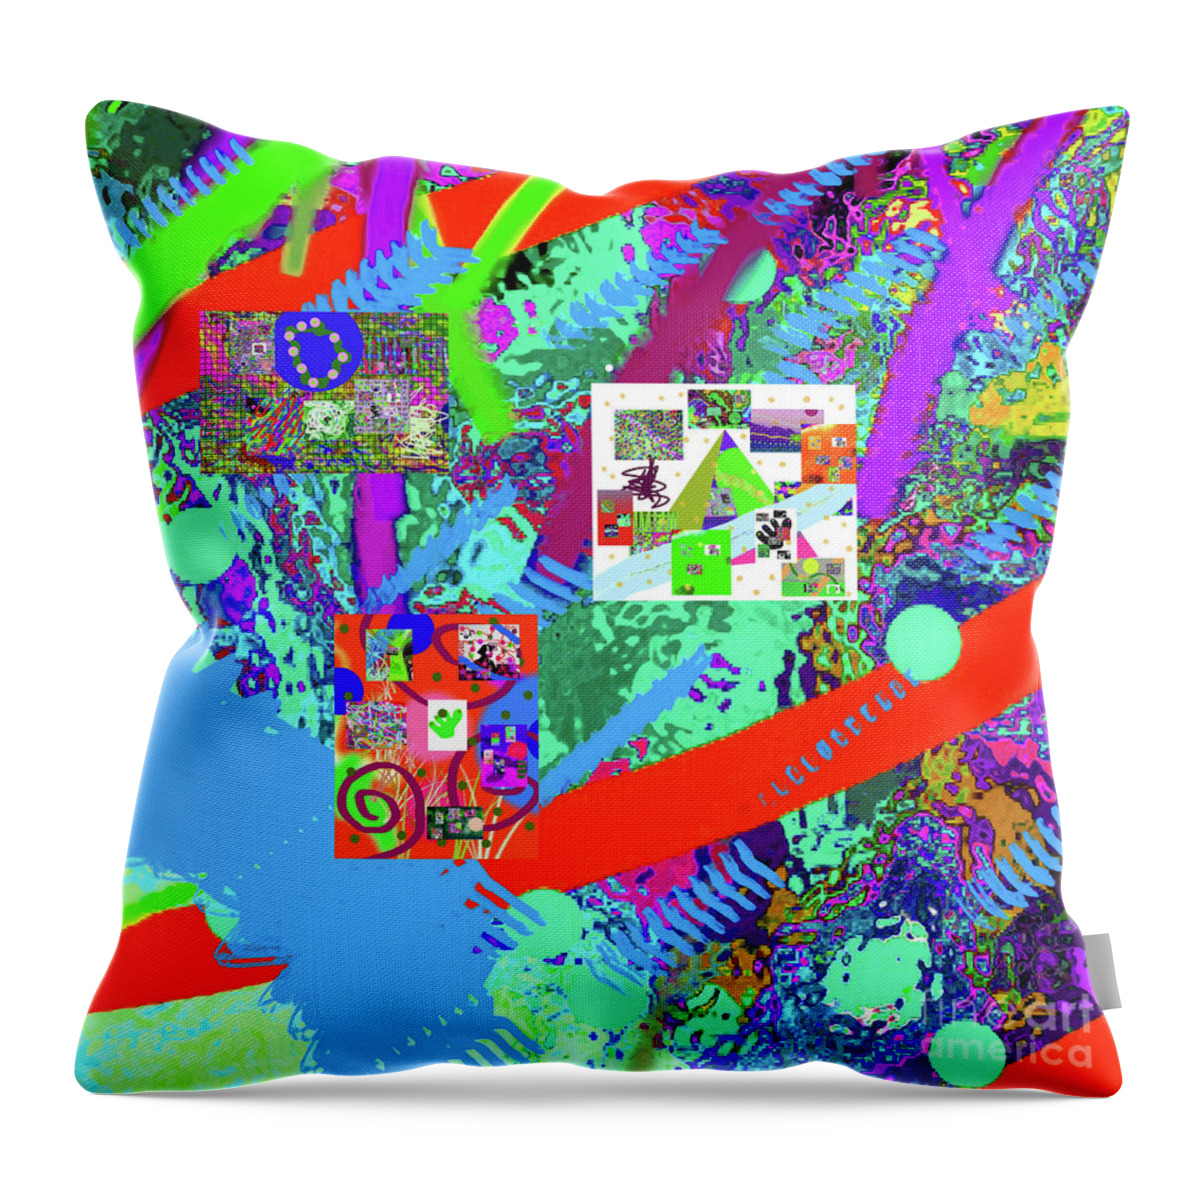 Walter Paul Bebirian Throw Pillow featuring the digital art 11-6-2015habcdefghijklmn by Walter Paul Bebirian